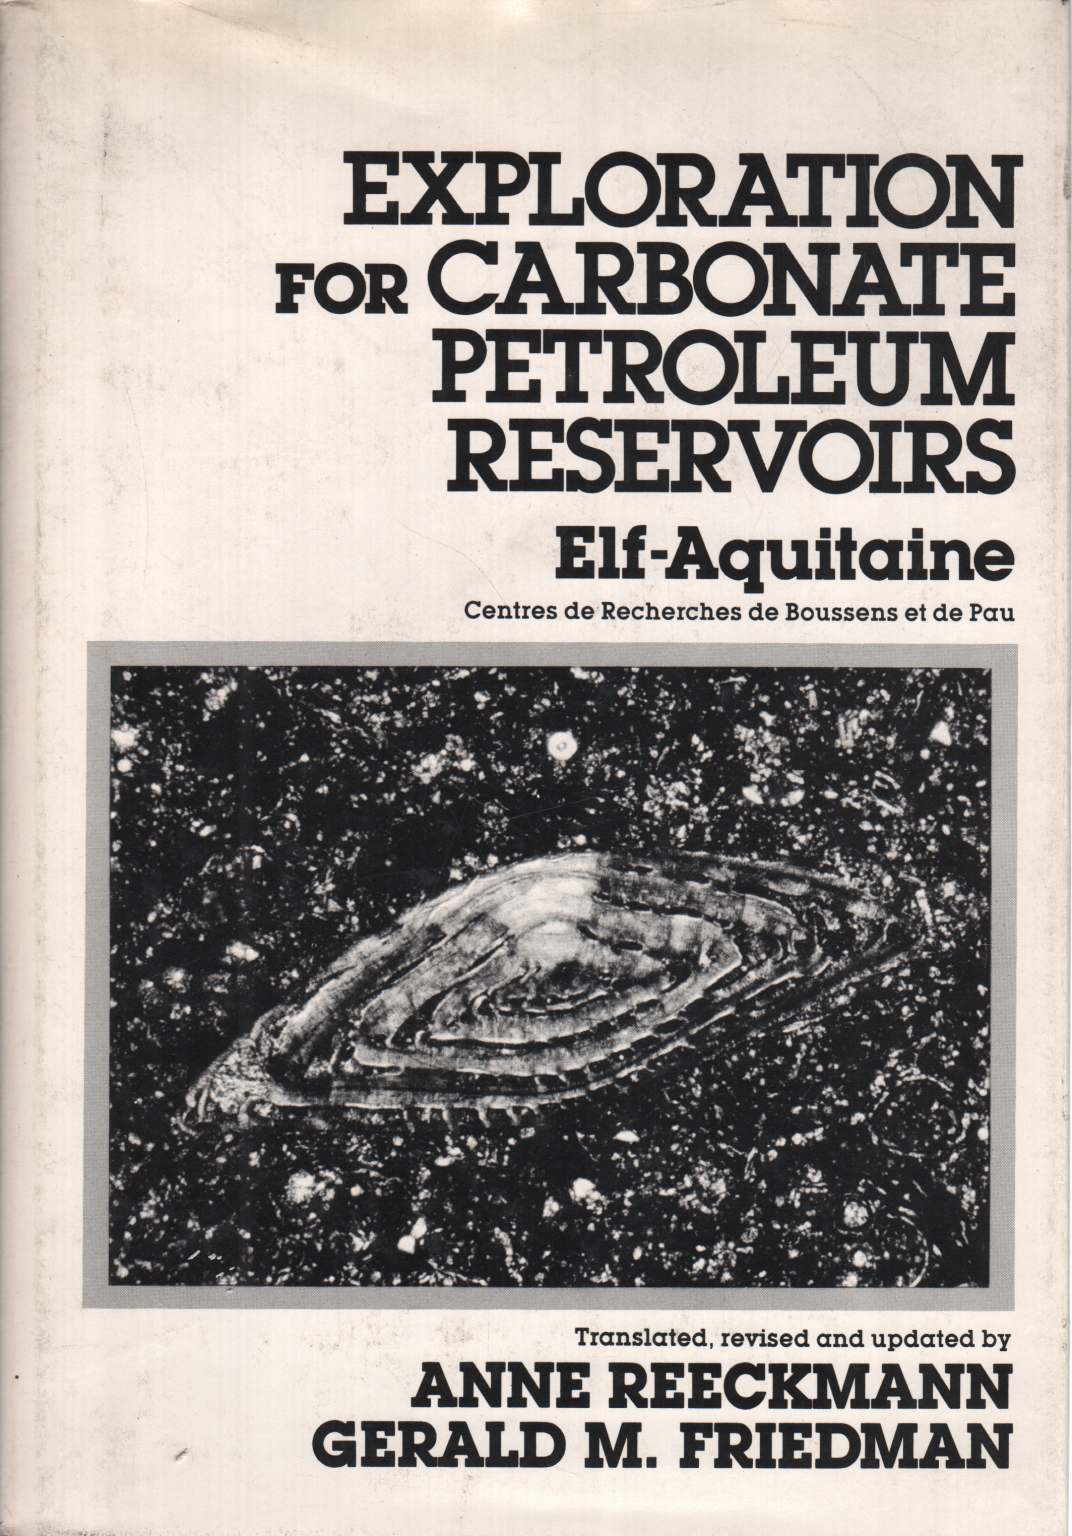 Exploration for carbonate petroleum reservoirs, Anne Reeckmann, Gerald M. Friedman